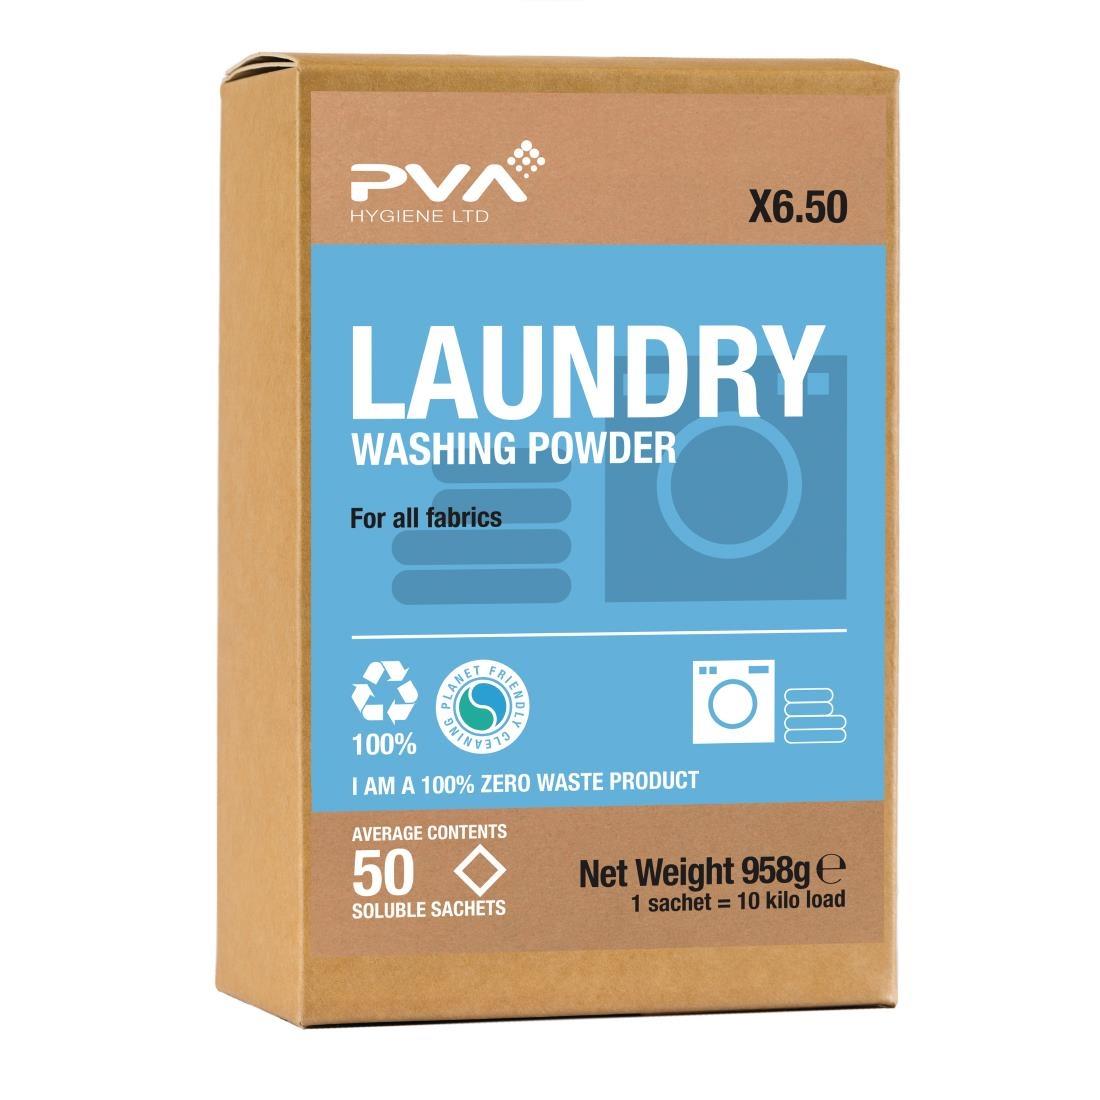 PVA Hygiene Laundry Washing Powder Soluble Sachets (50 Sachets) - FE756  - 1